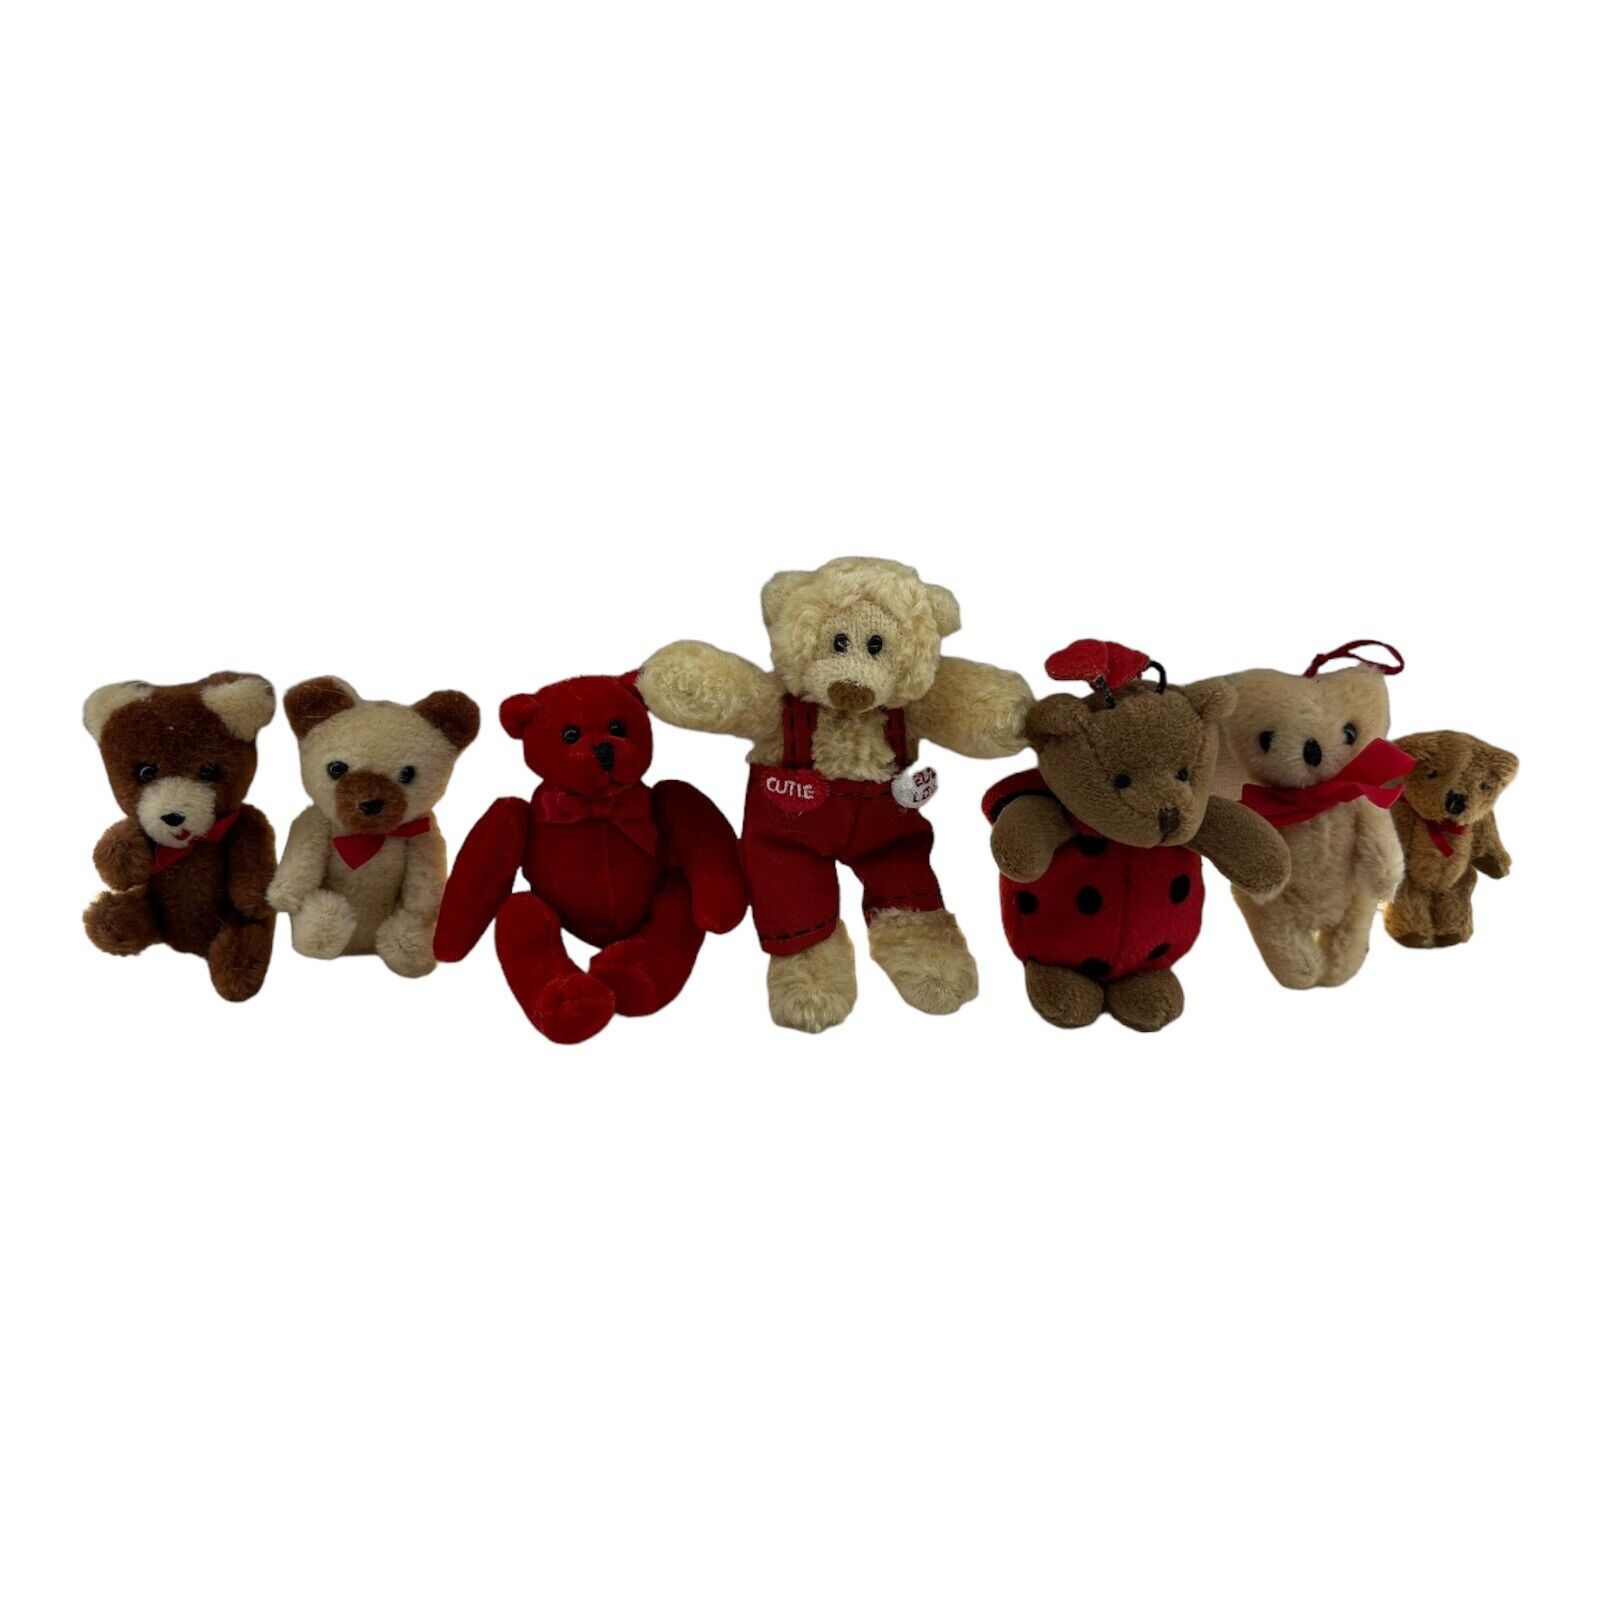 (7) Piece Miniature Teddy Bear Plush Lot Gund Russ Holiday Ornaments NO TAGS